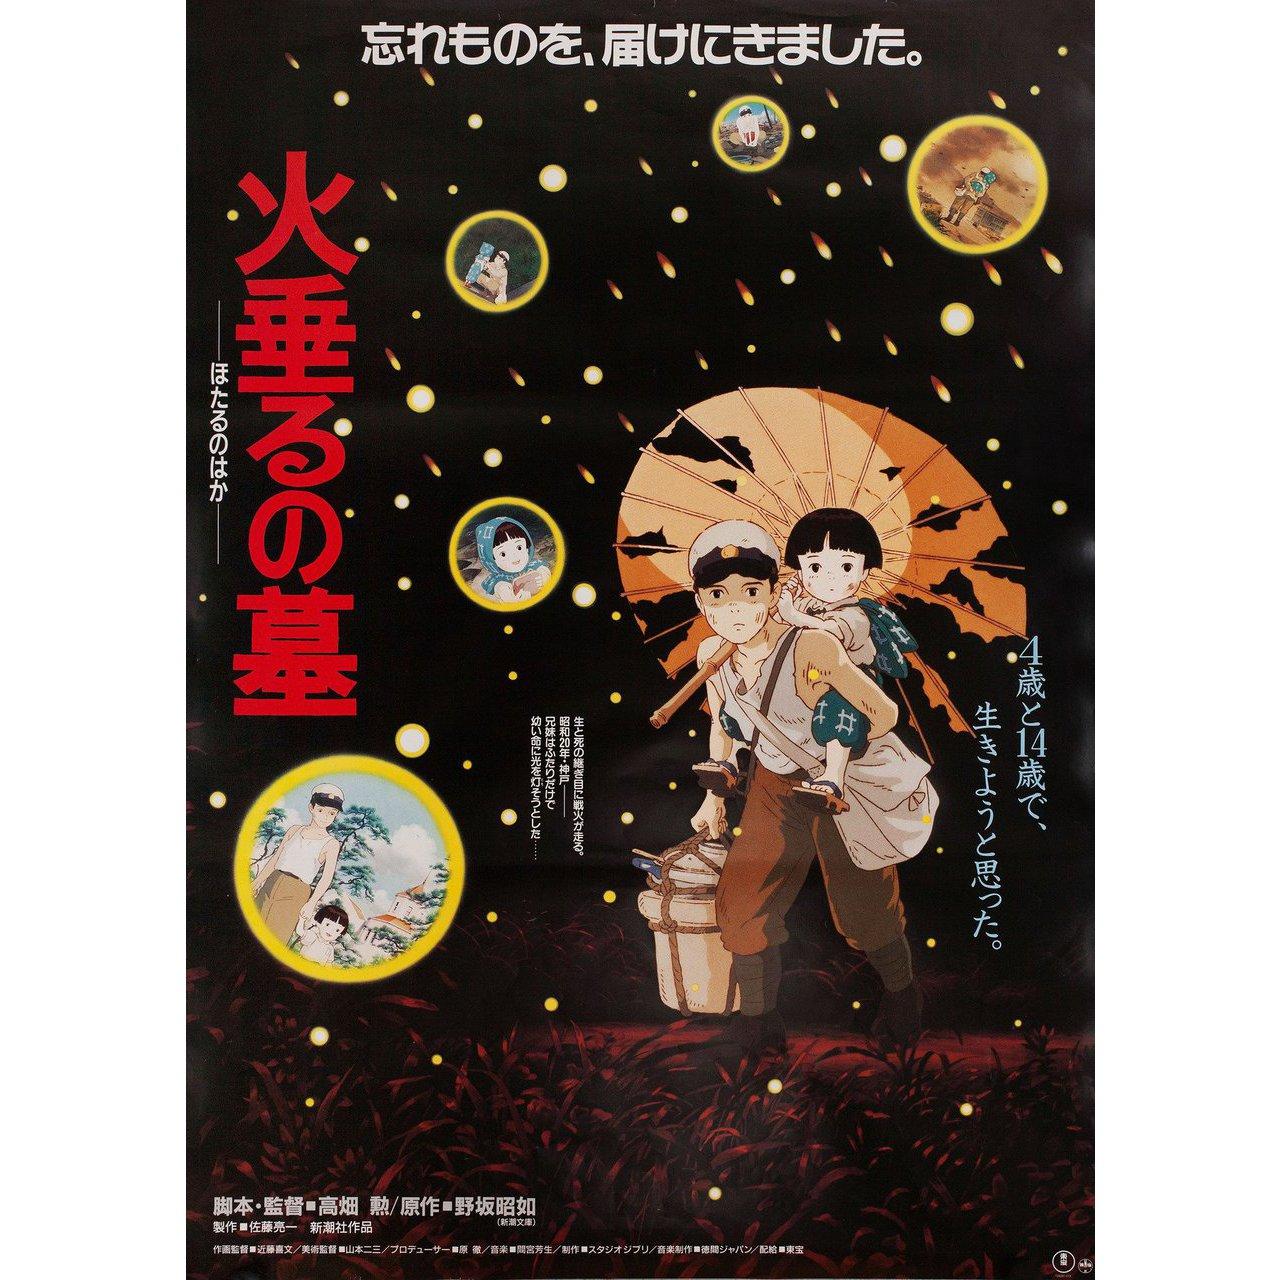 Original 1988 Japanese B2 poster for the film “Grave of the Fireflies” (Hotaru no haka) directed by Isao Takahata with Tsutomu Tatsumi / Ayano Shiraishi / Yoshiko Shinohara / Akemi Yamaguchi. Very good-fine condition, rolled. Please note: the size